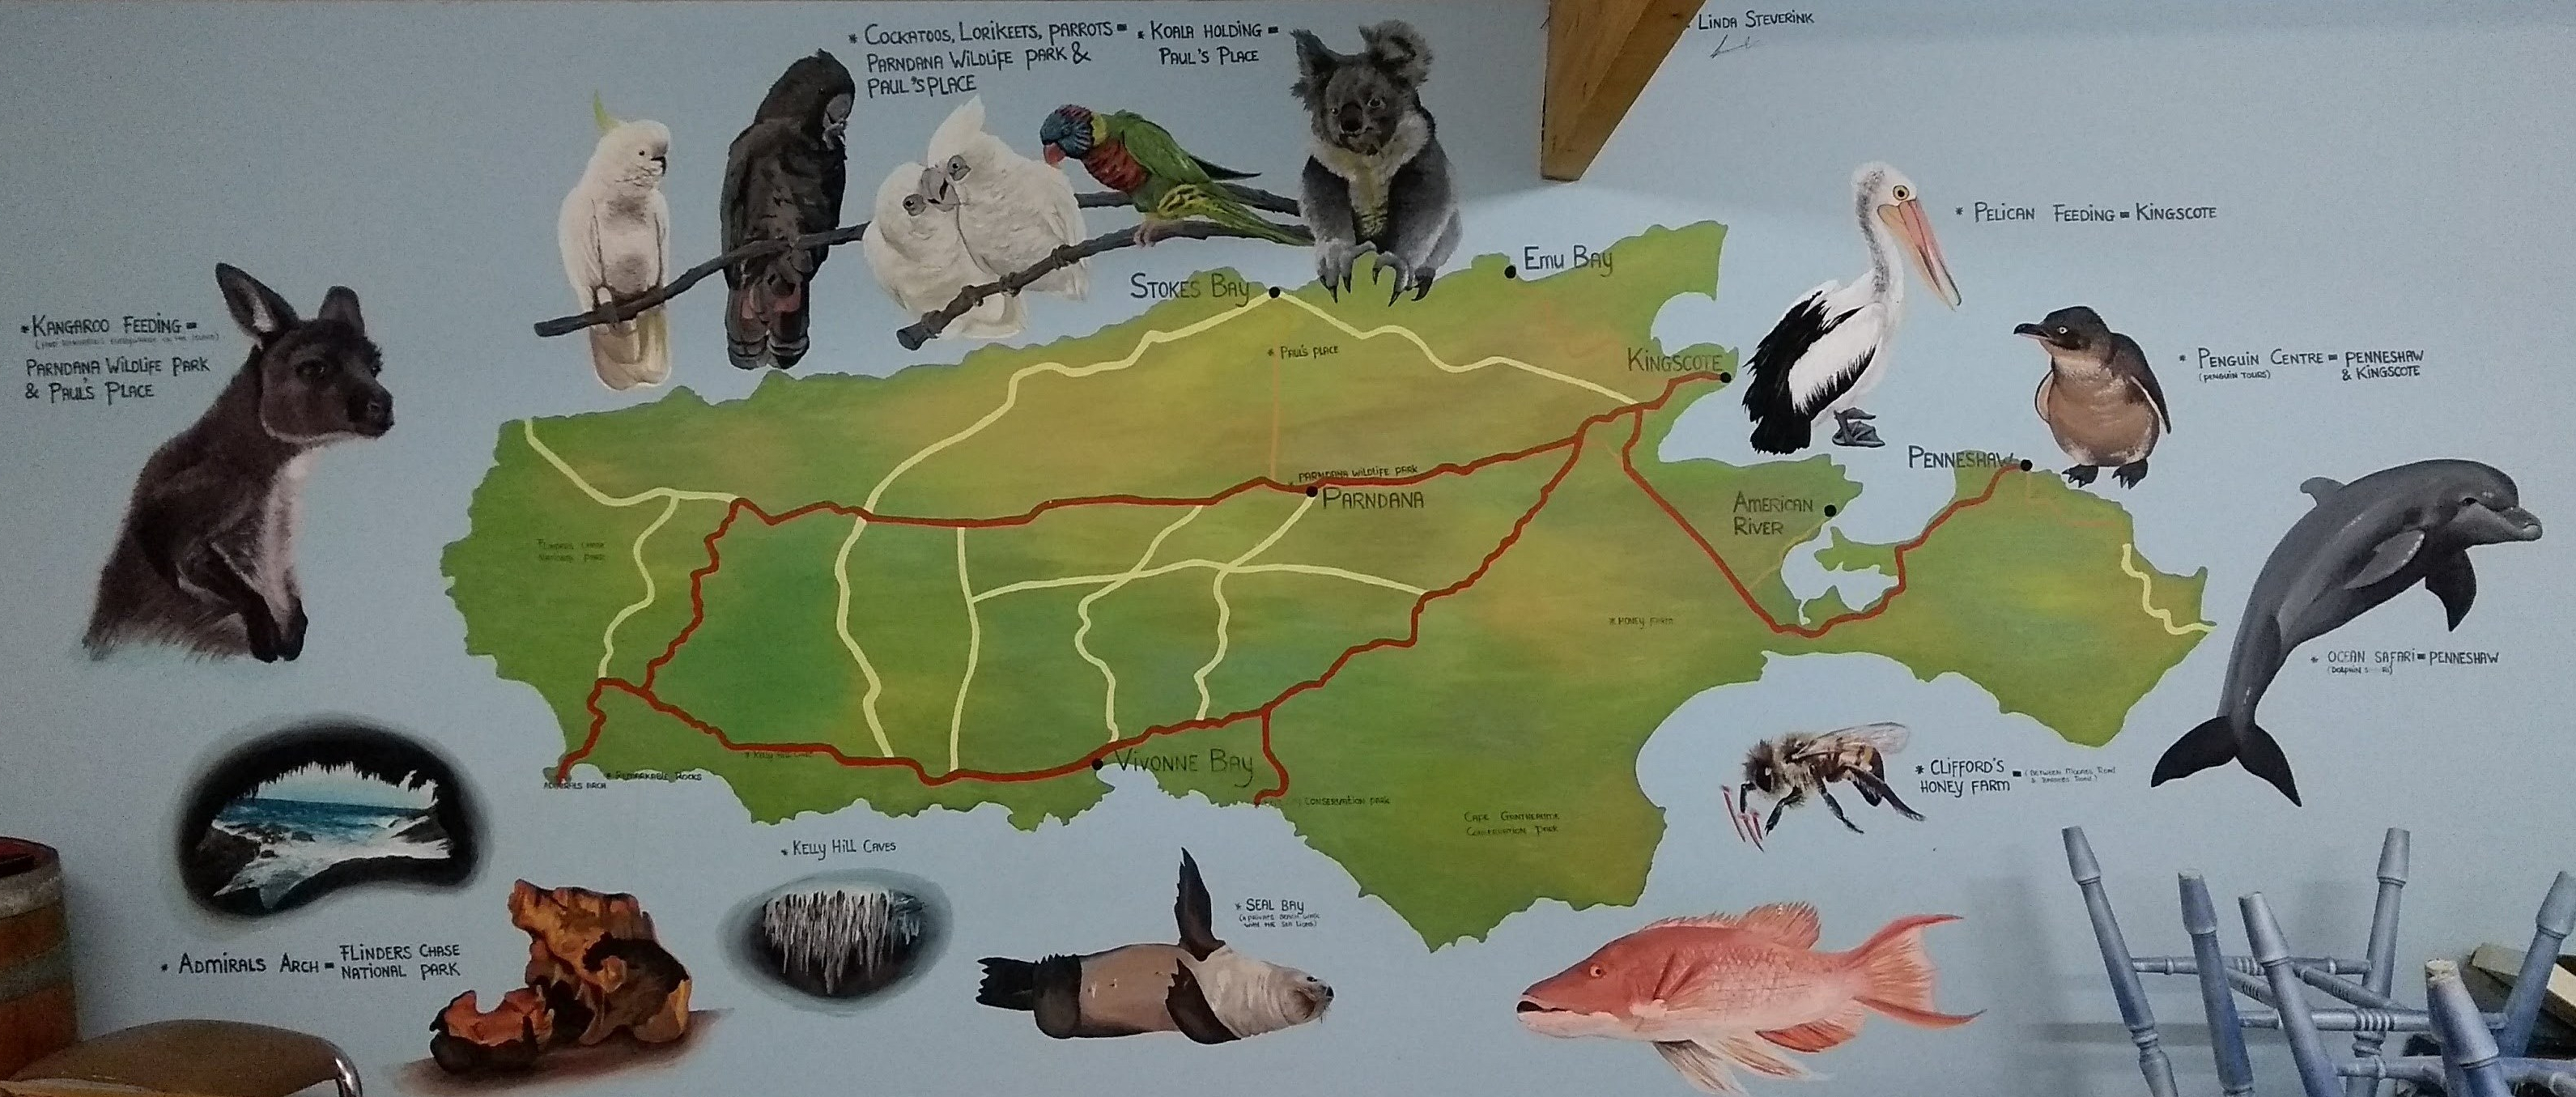 Kangaroo Island animali selvatici mappa disegnata